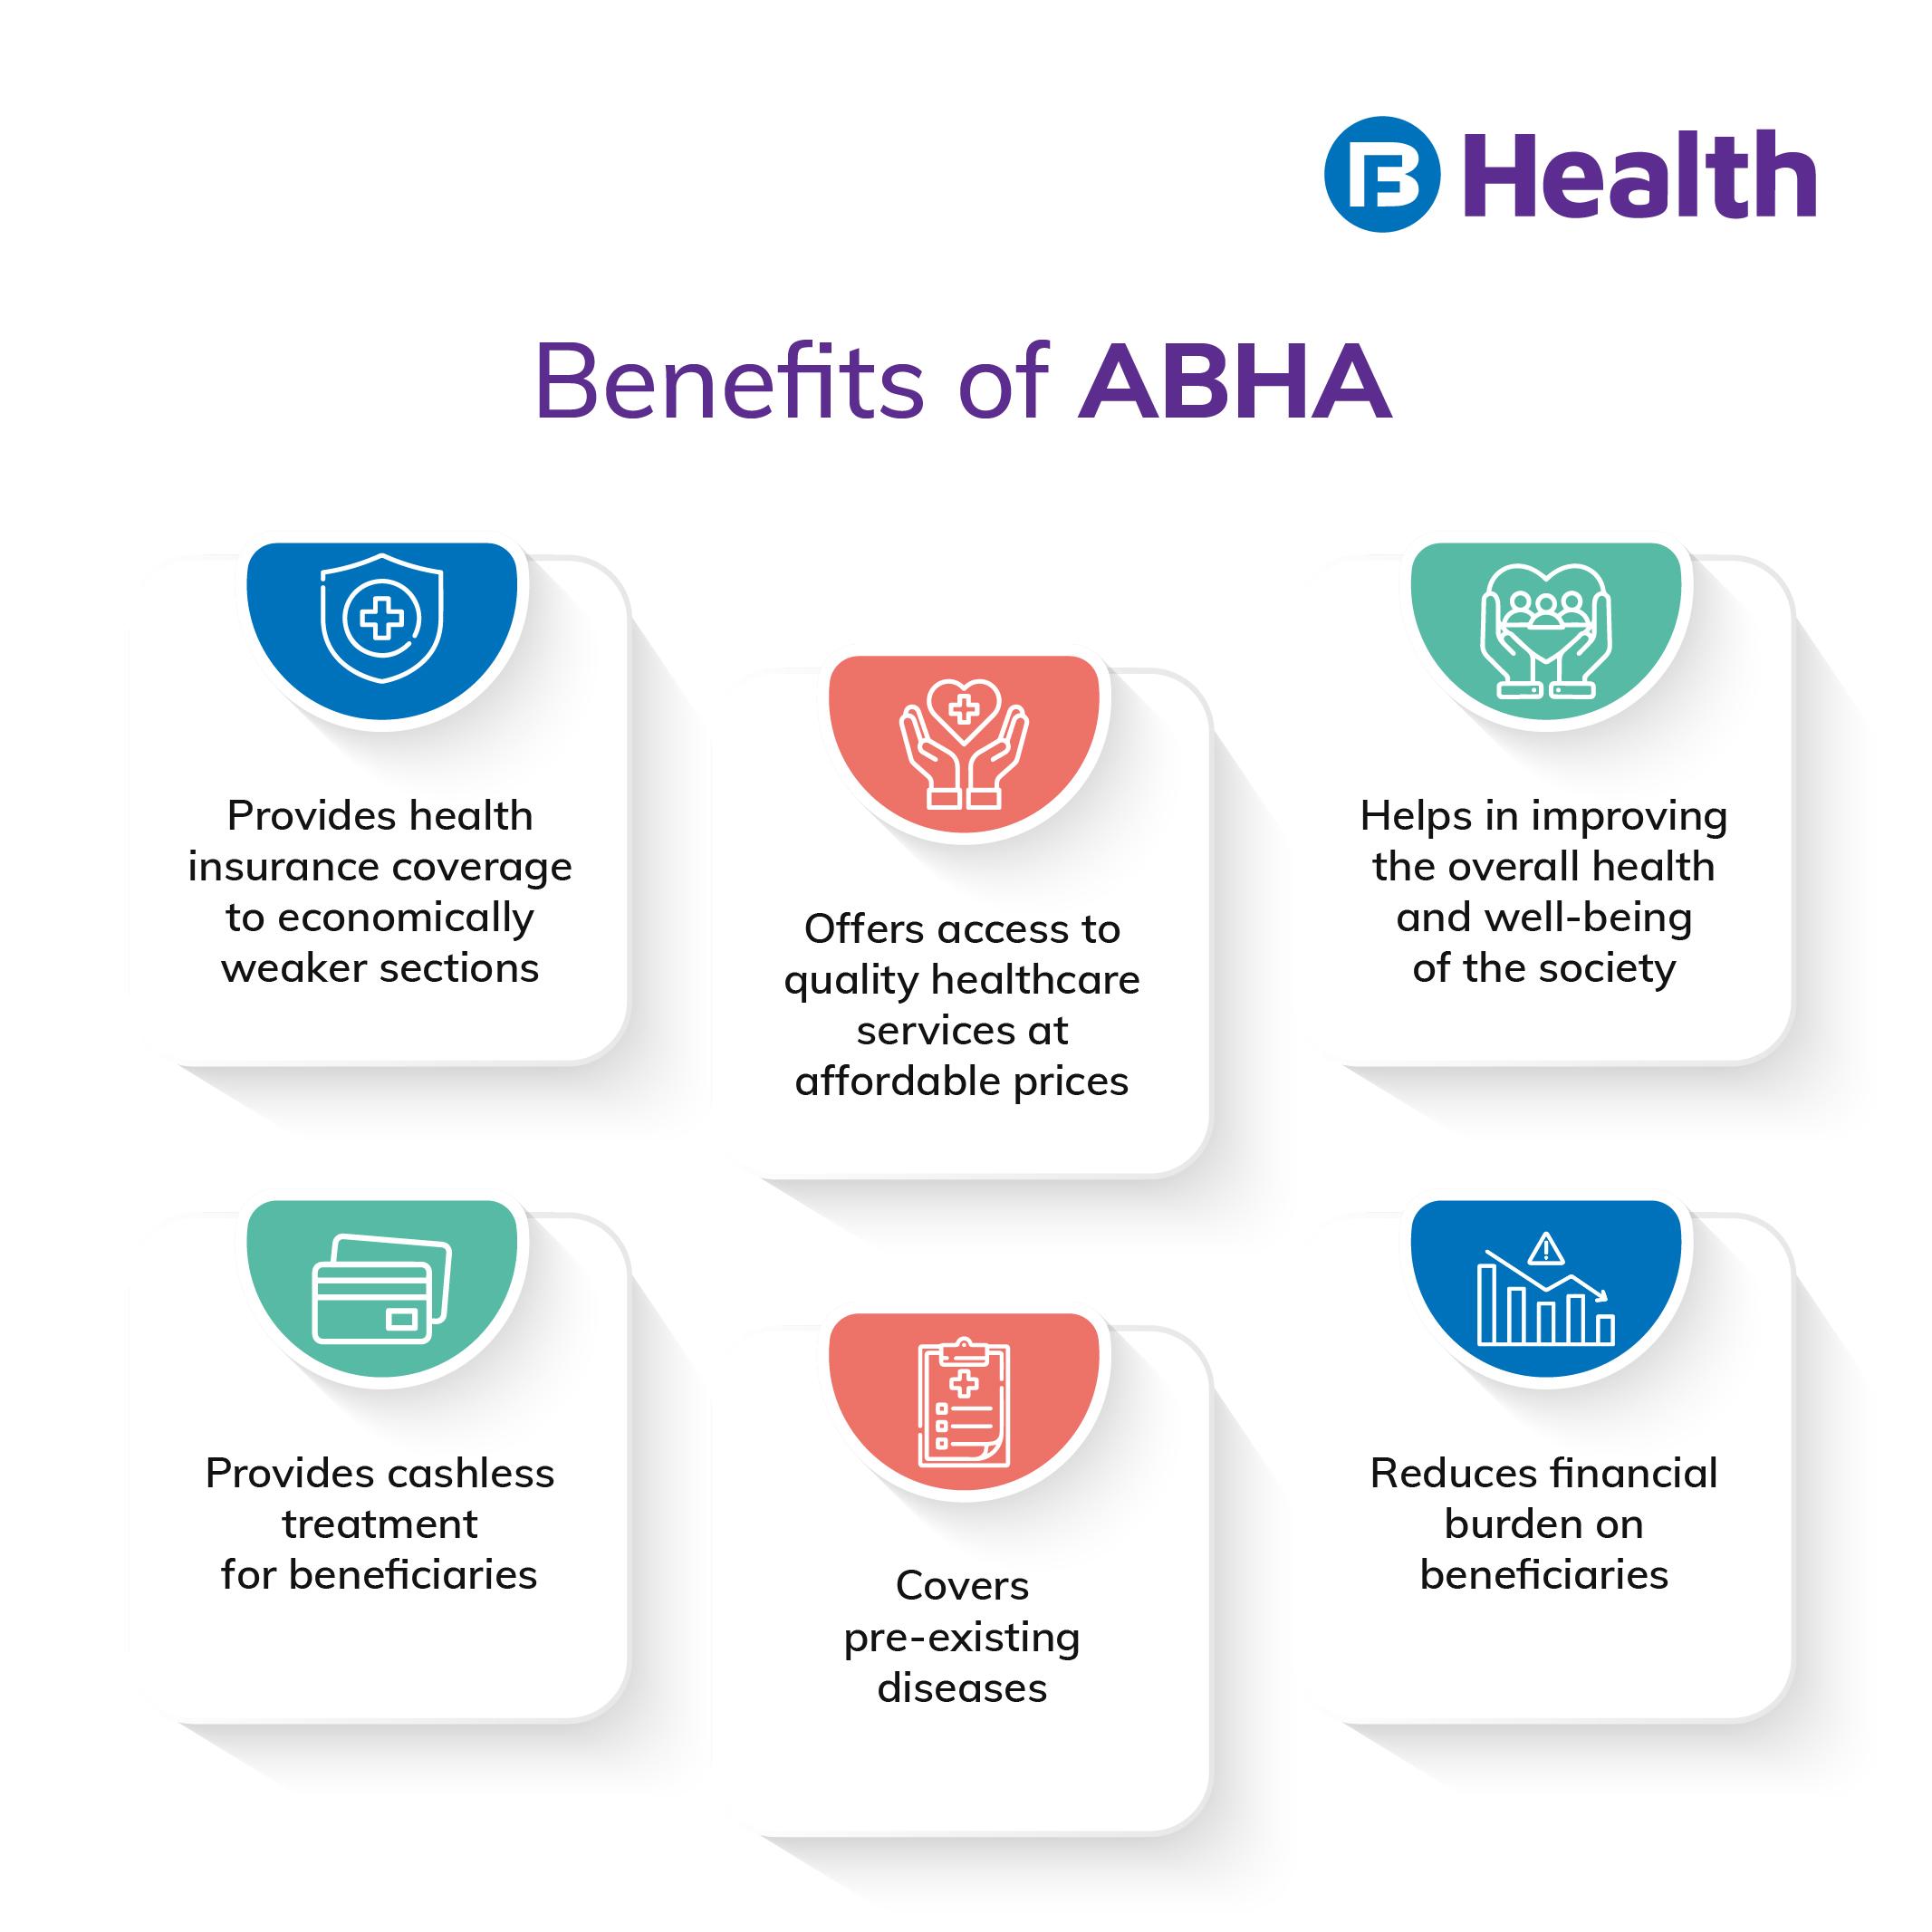 Benefits of ABHA